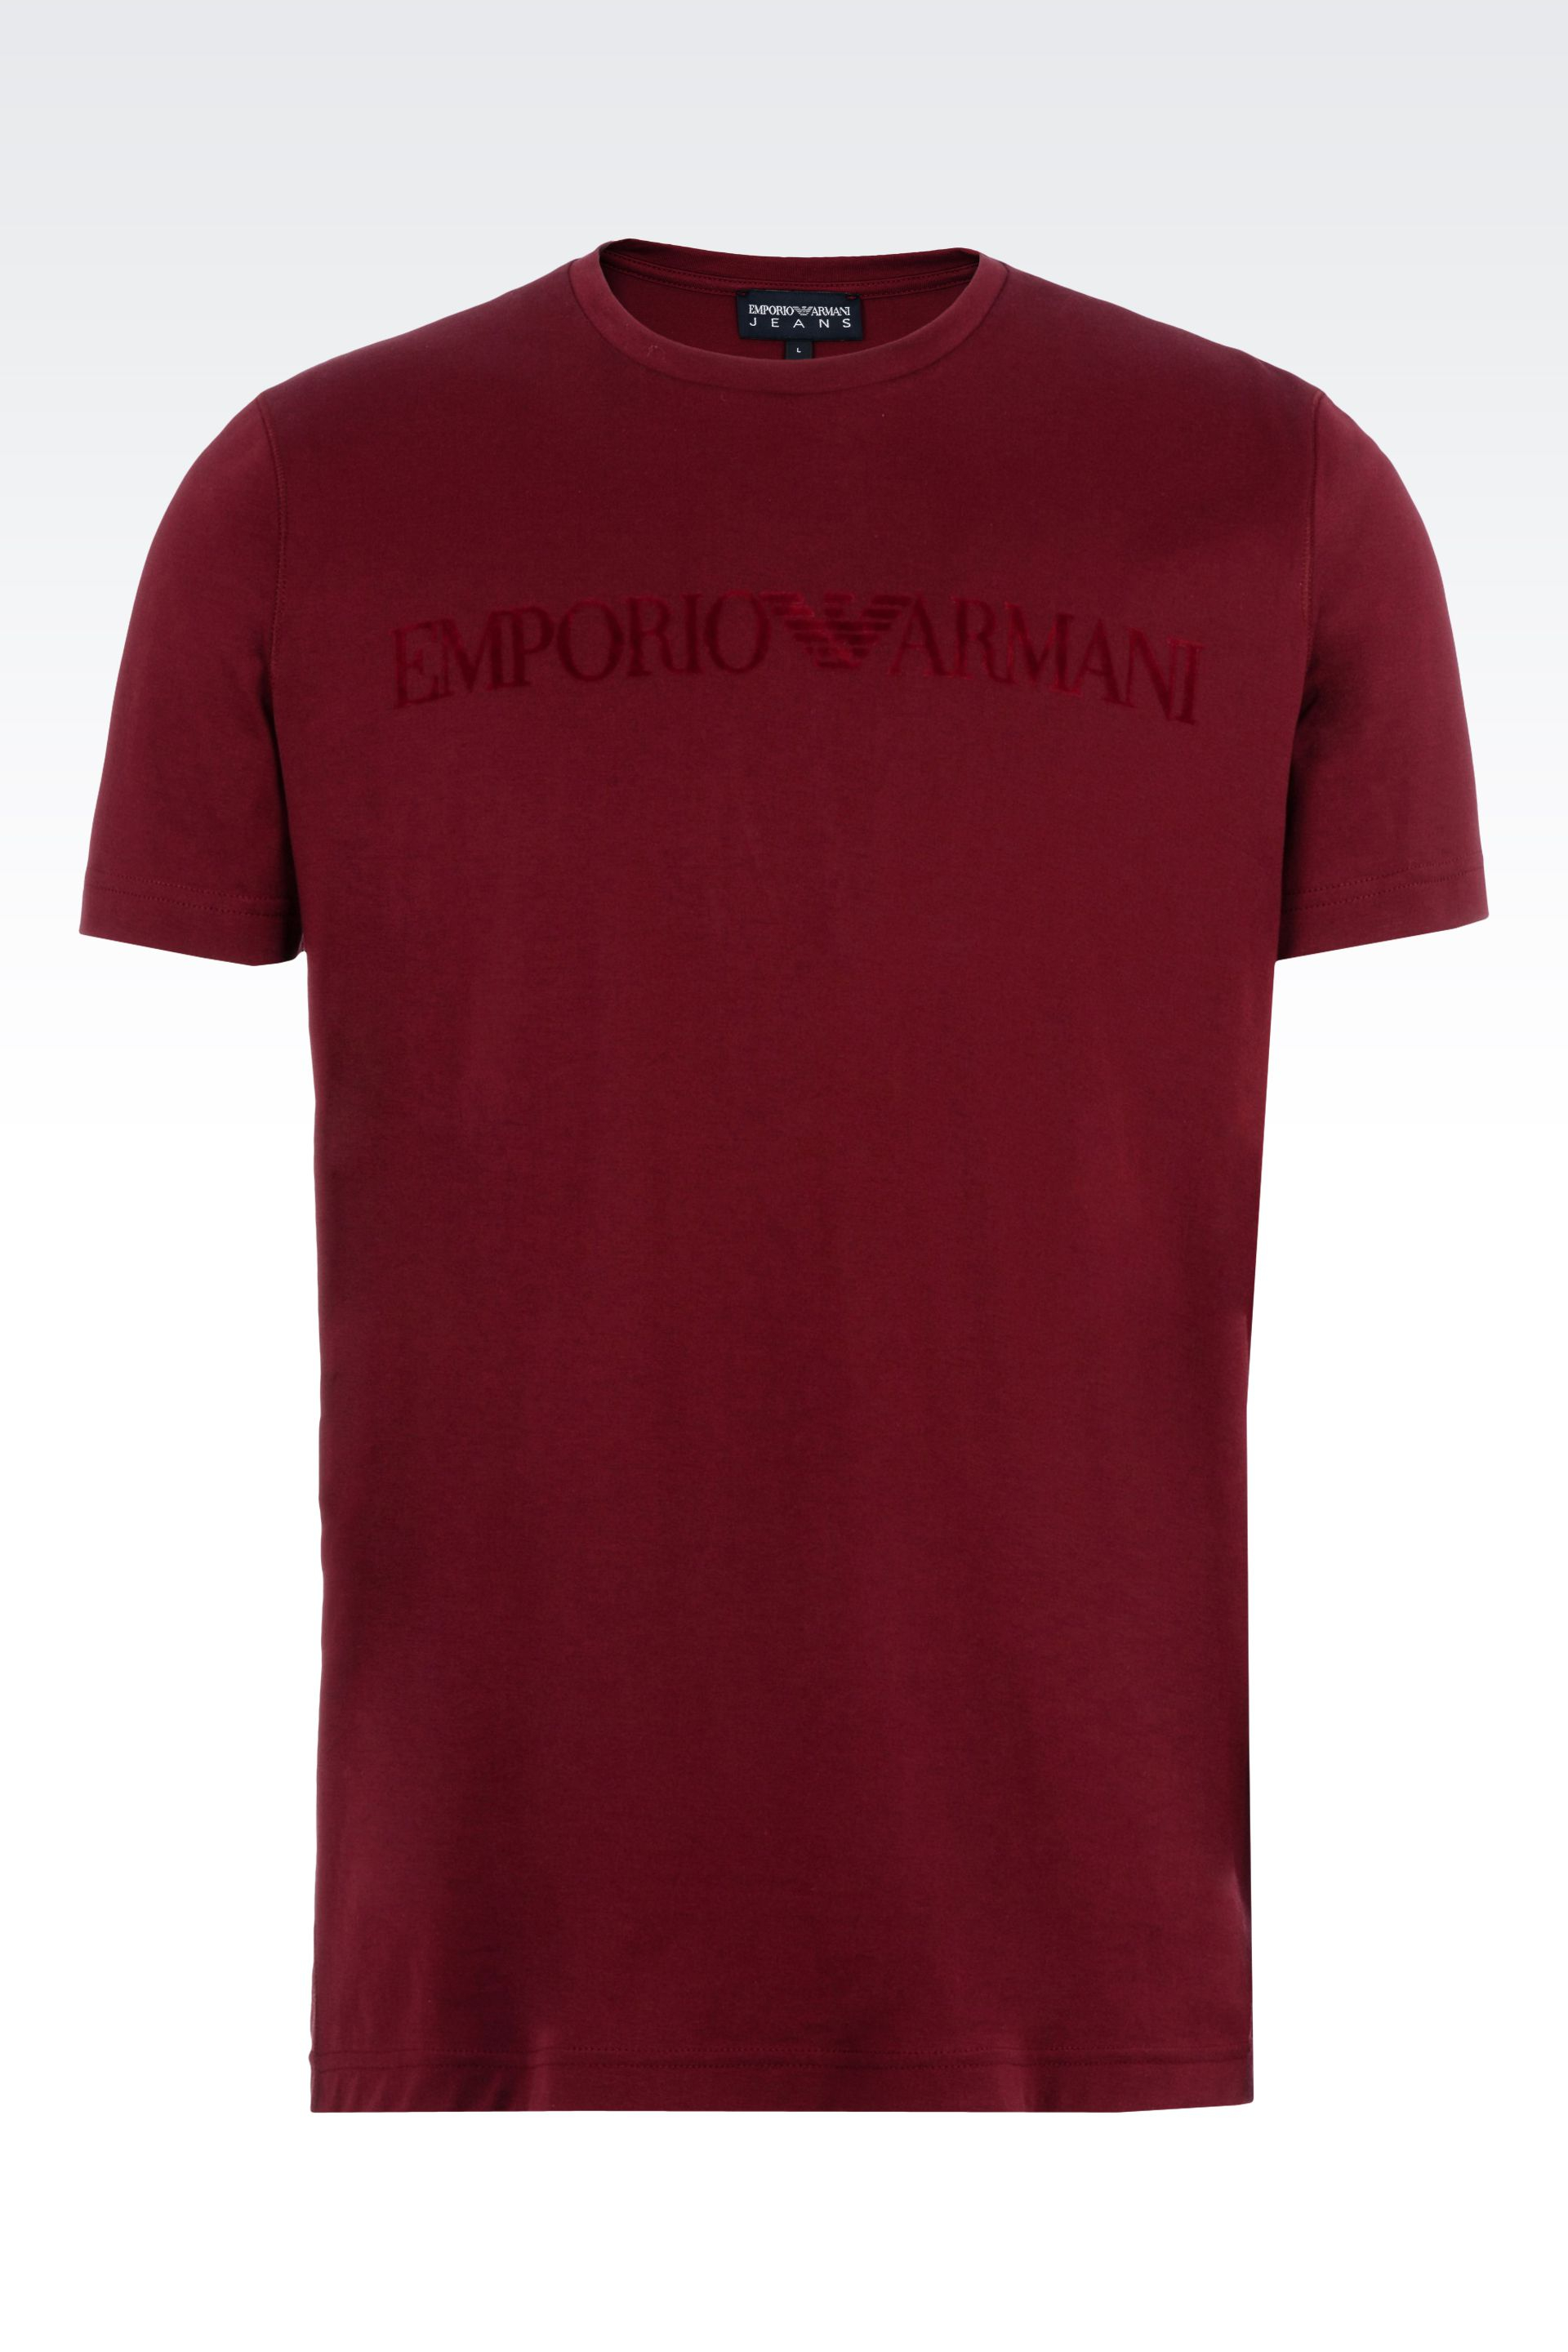 Red Armani T Shirt Top Sellers, 57% OFF | edetaria.com